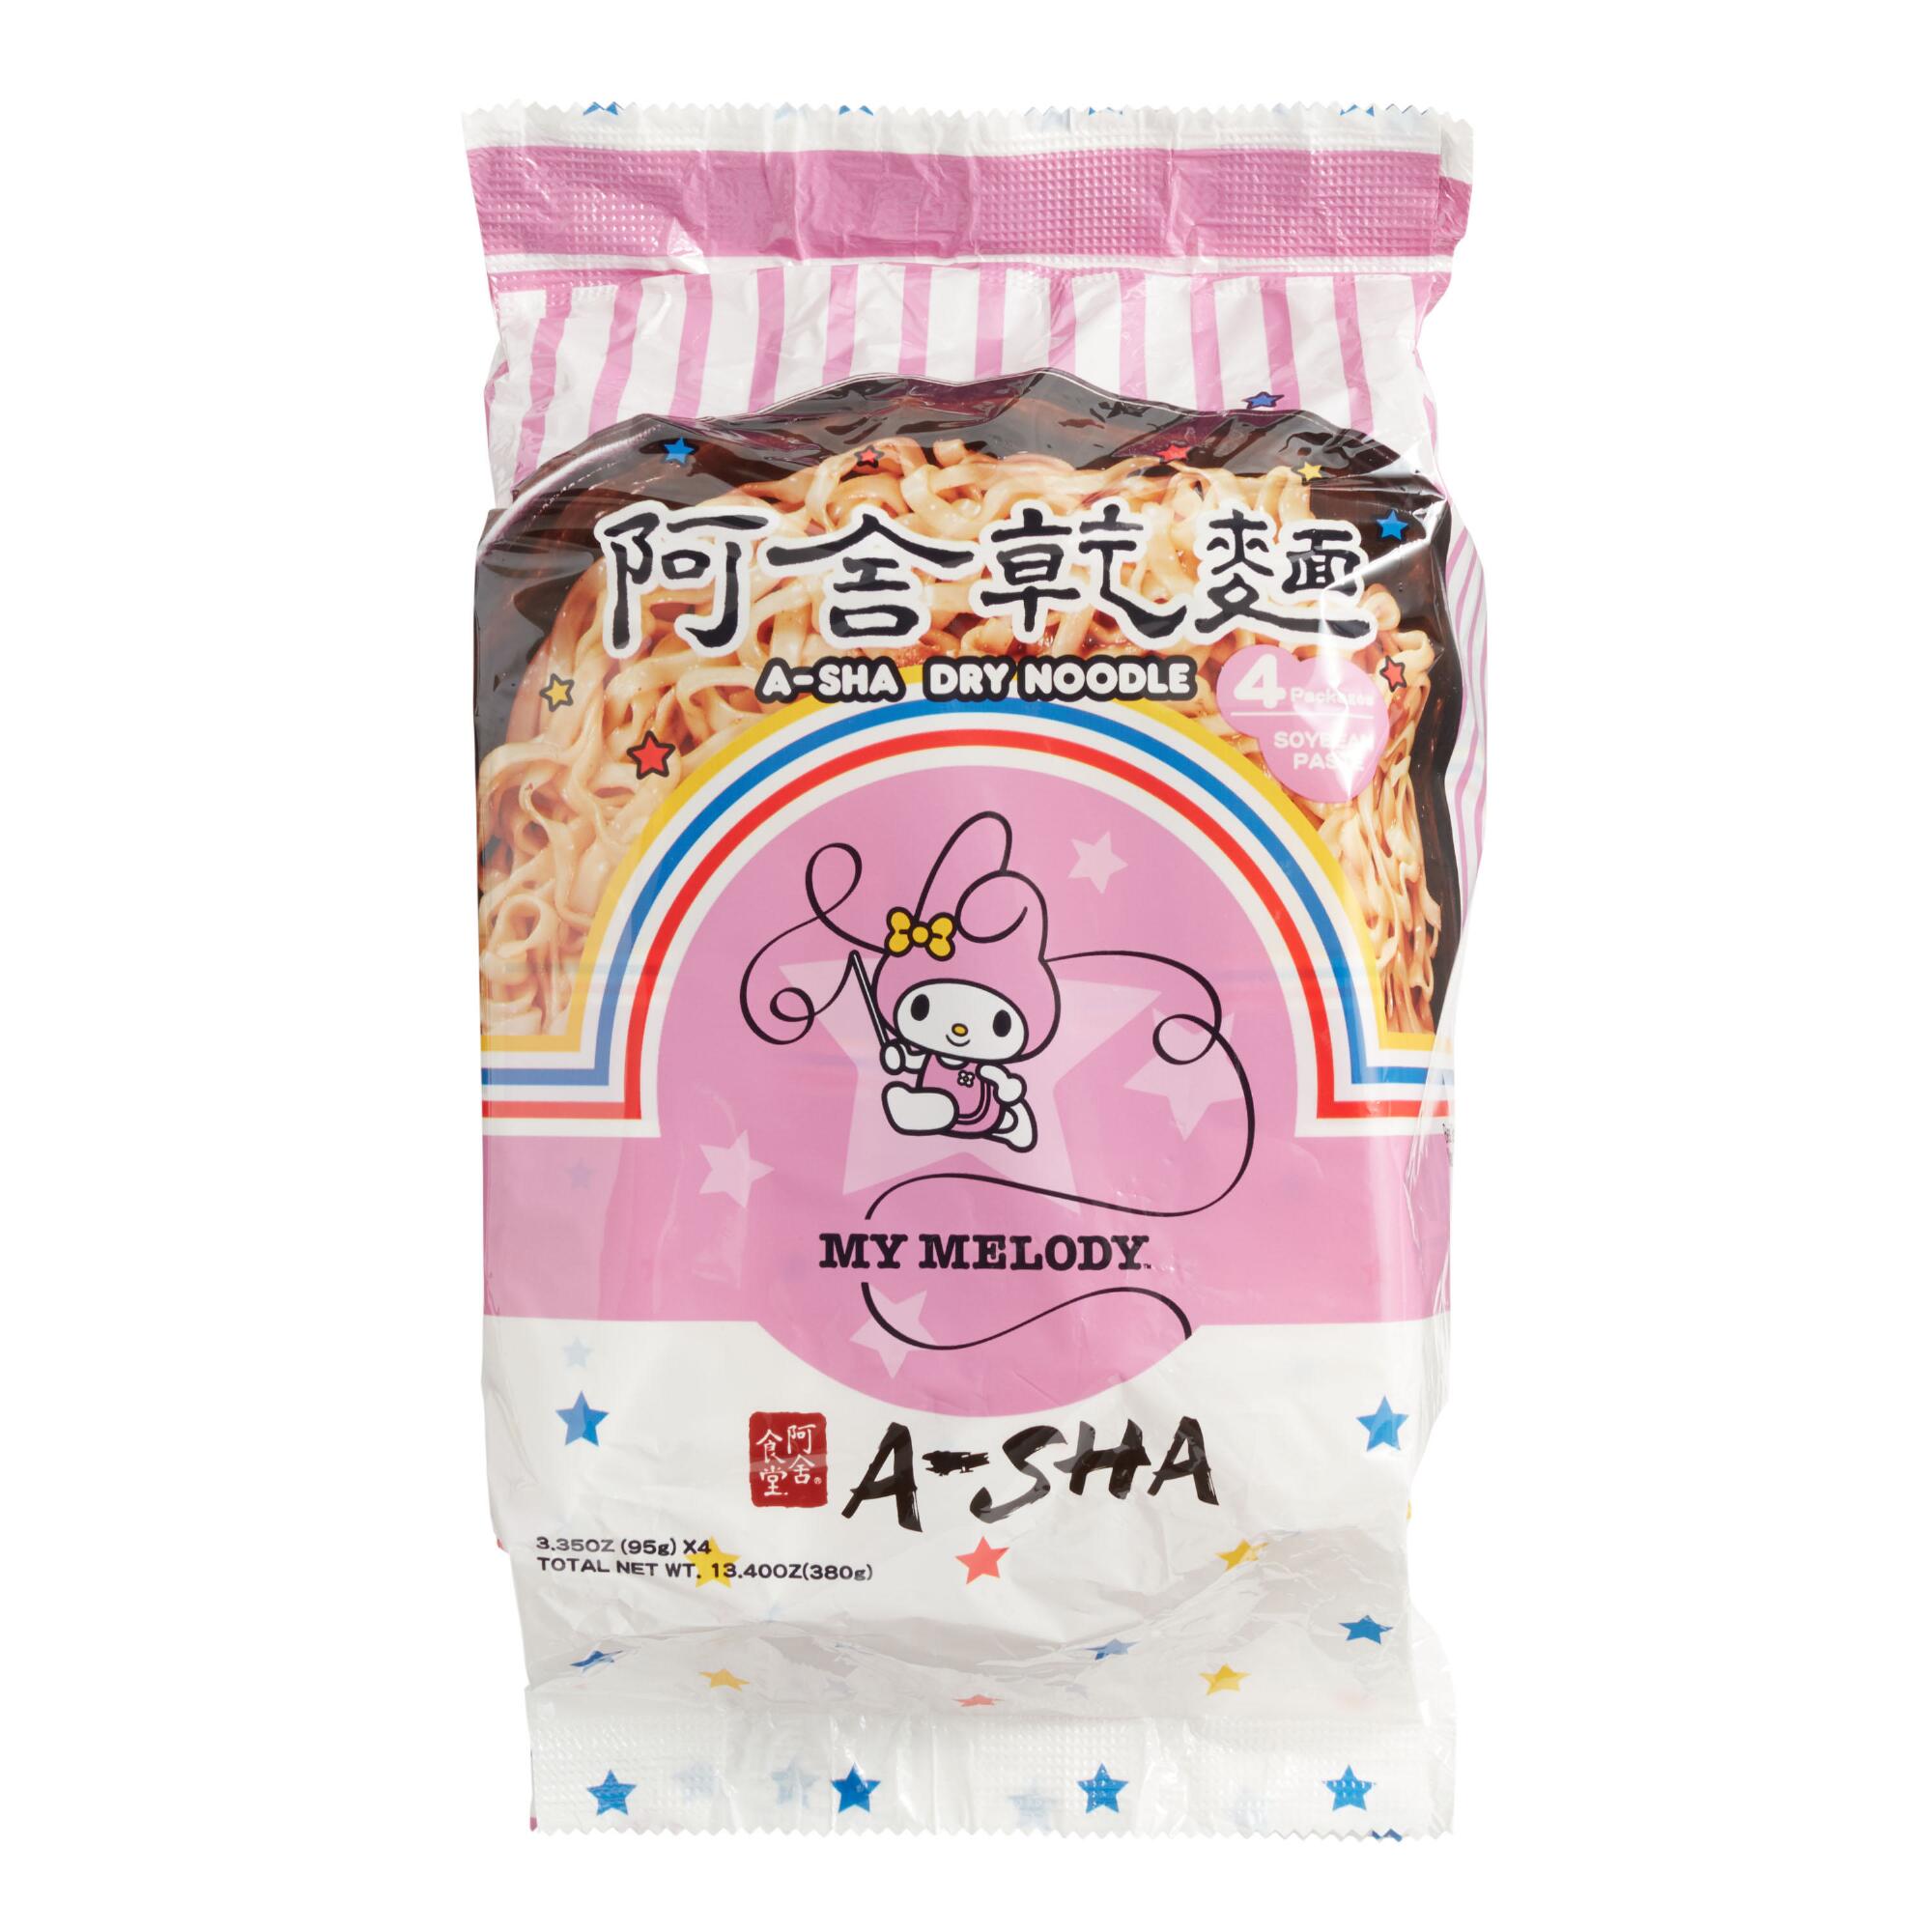 A-Sha My Melody Soybean Paste Ramen Noodles 4 Pack by World Market